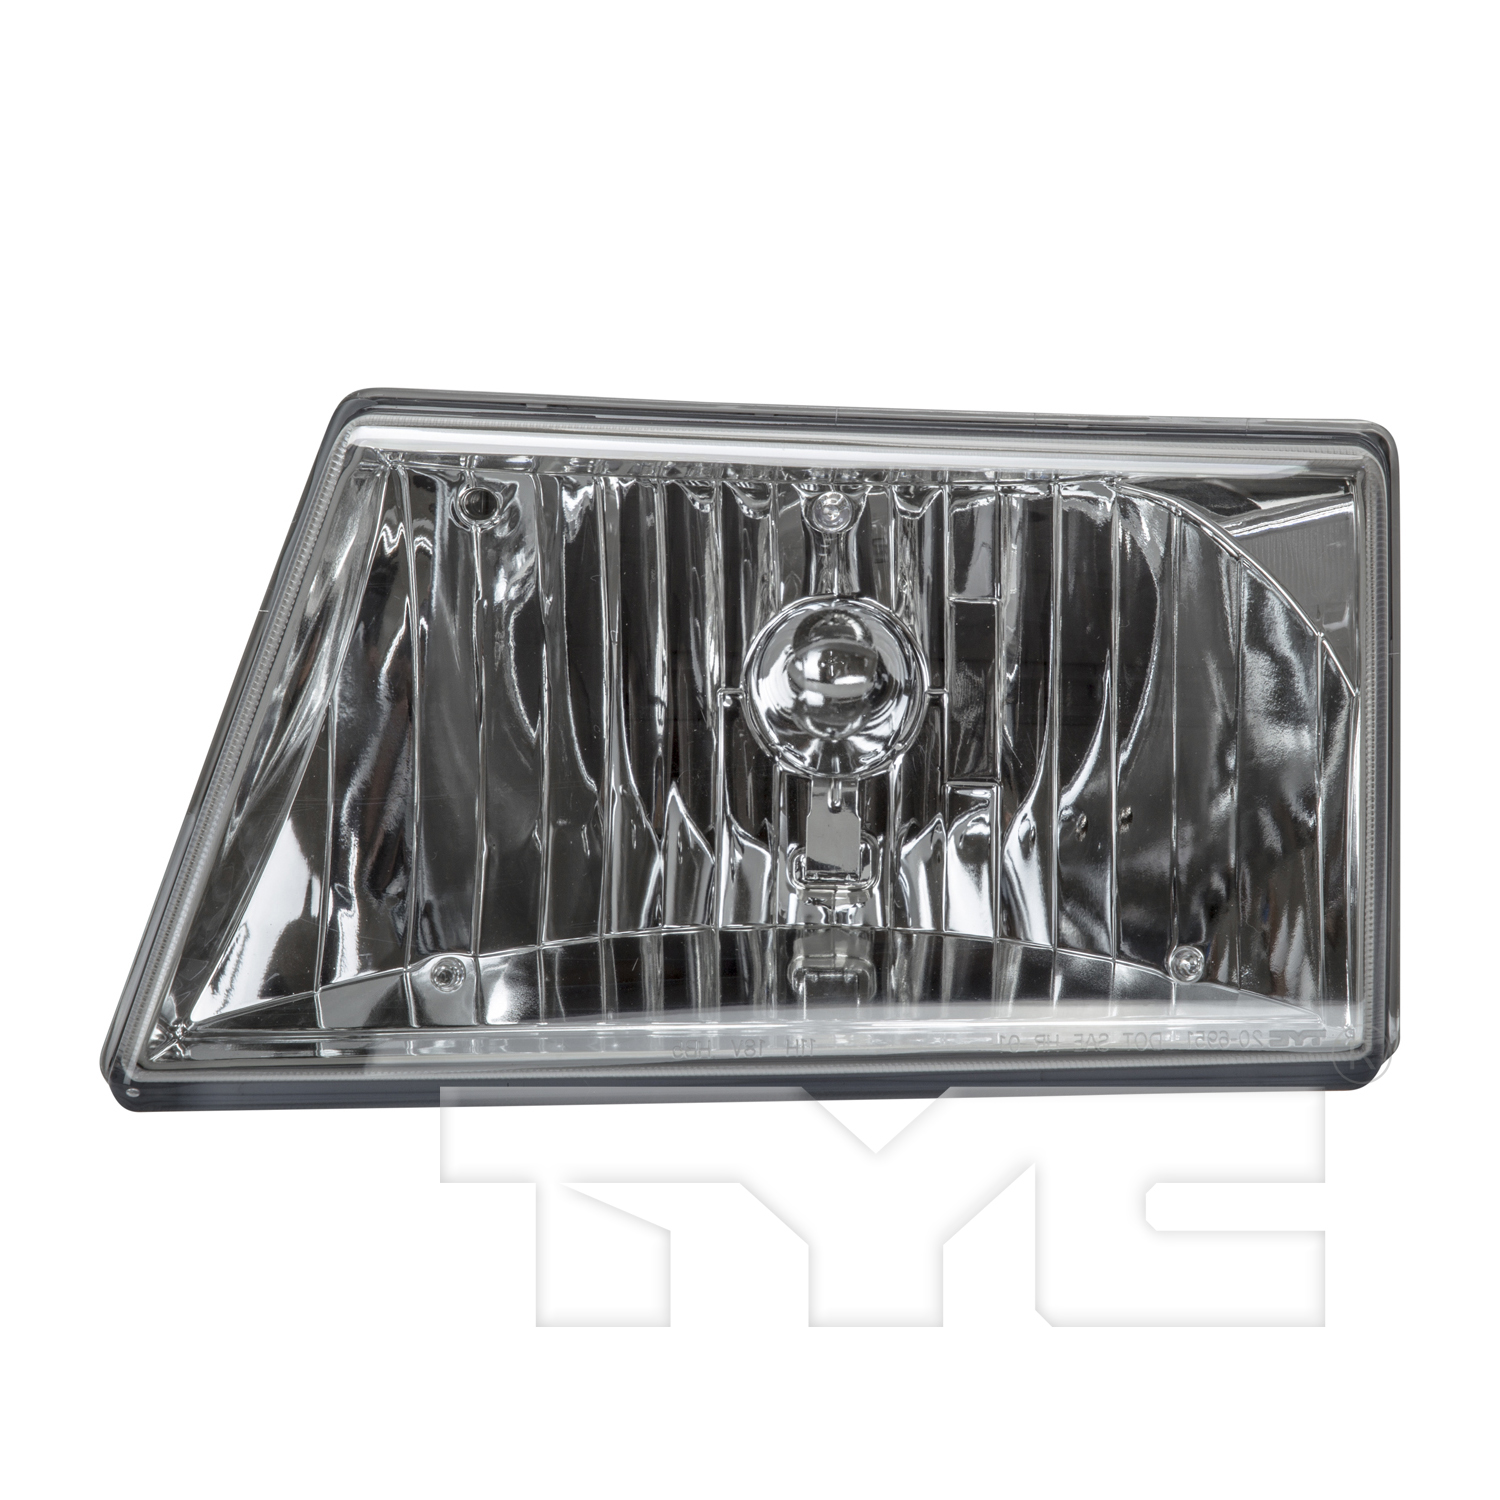 Aftermarket HEADLIGHTS for MAZDA - B2500, B2500,01-01,LT Headlamp assy composite